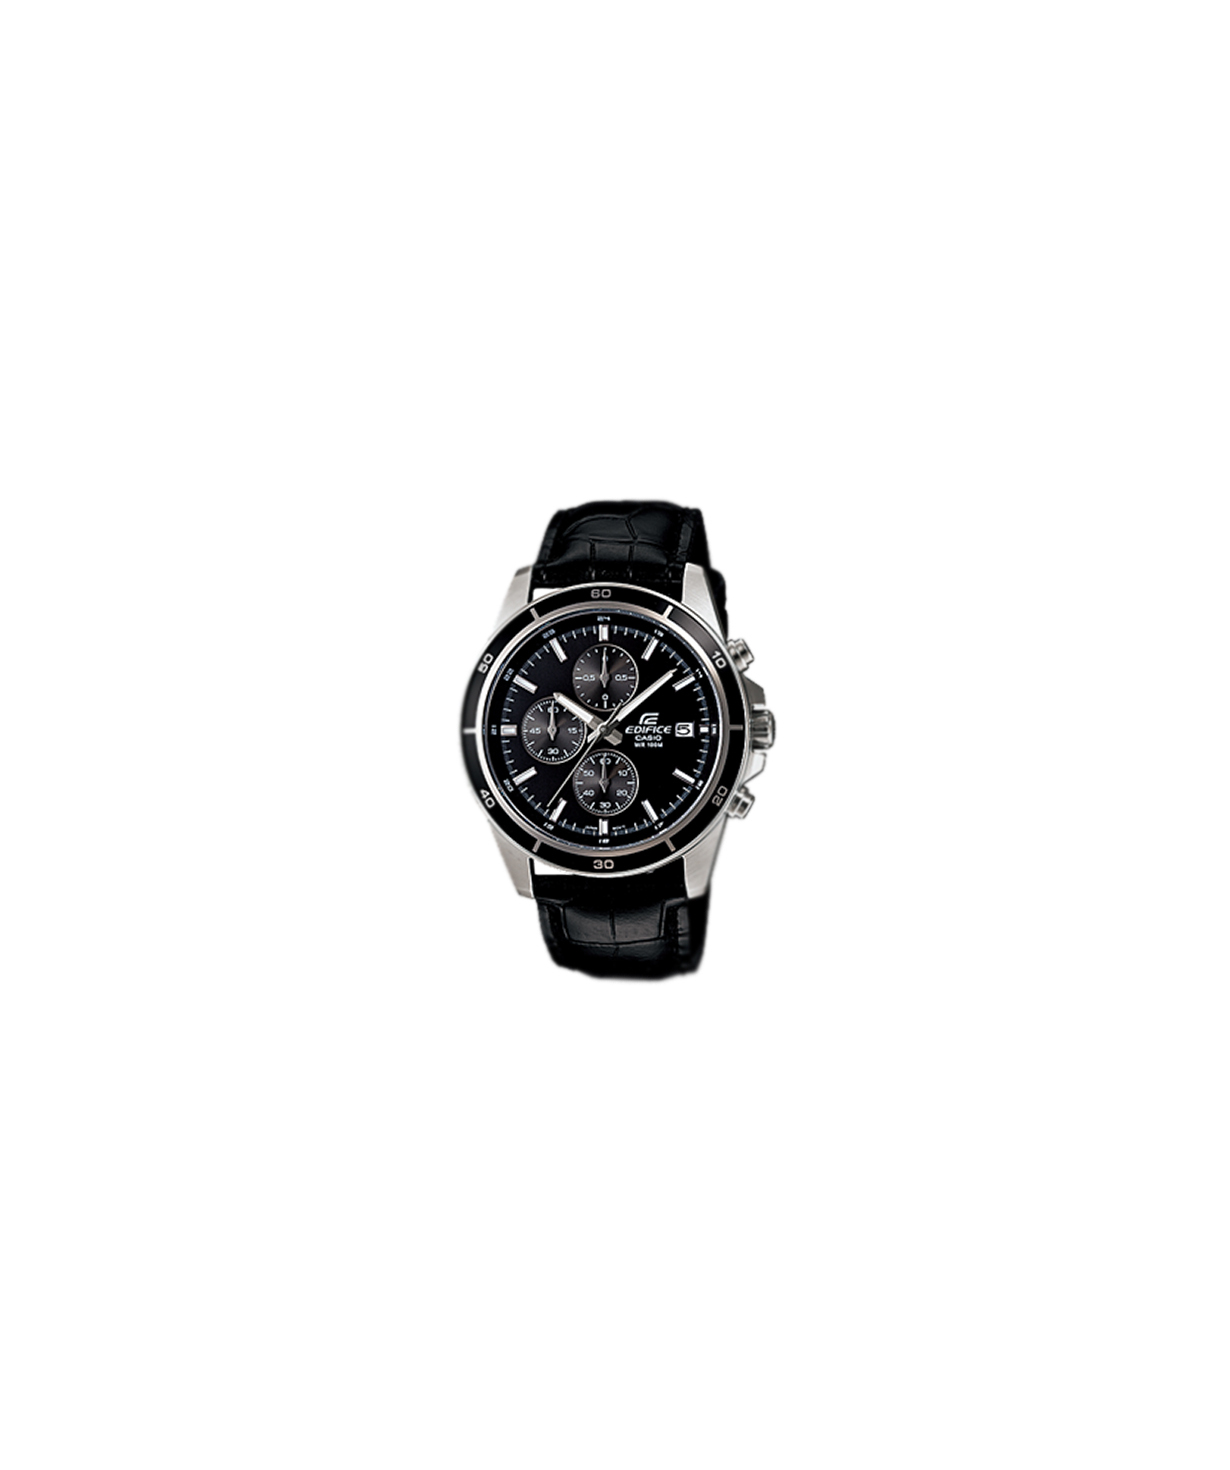 Ժամացույց  «Casio» ձեռքի  EFR-526L-1AVUDF